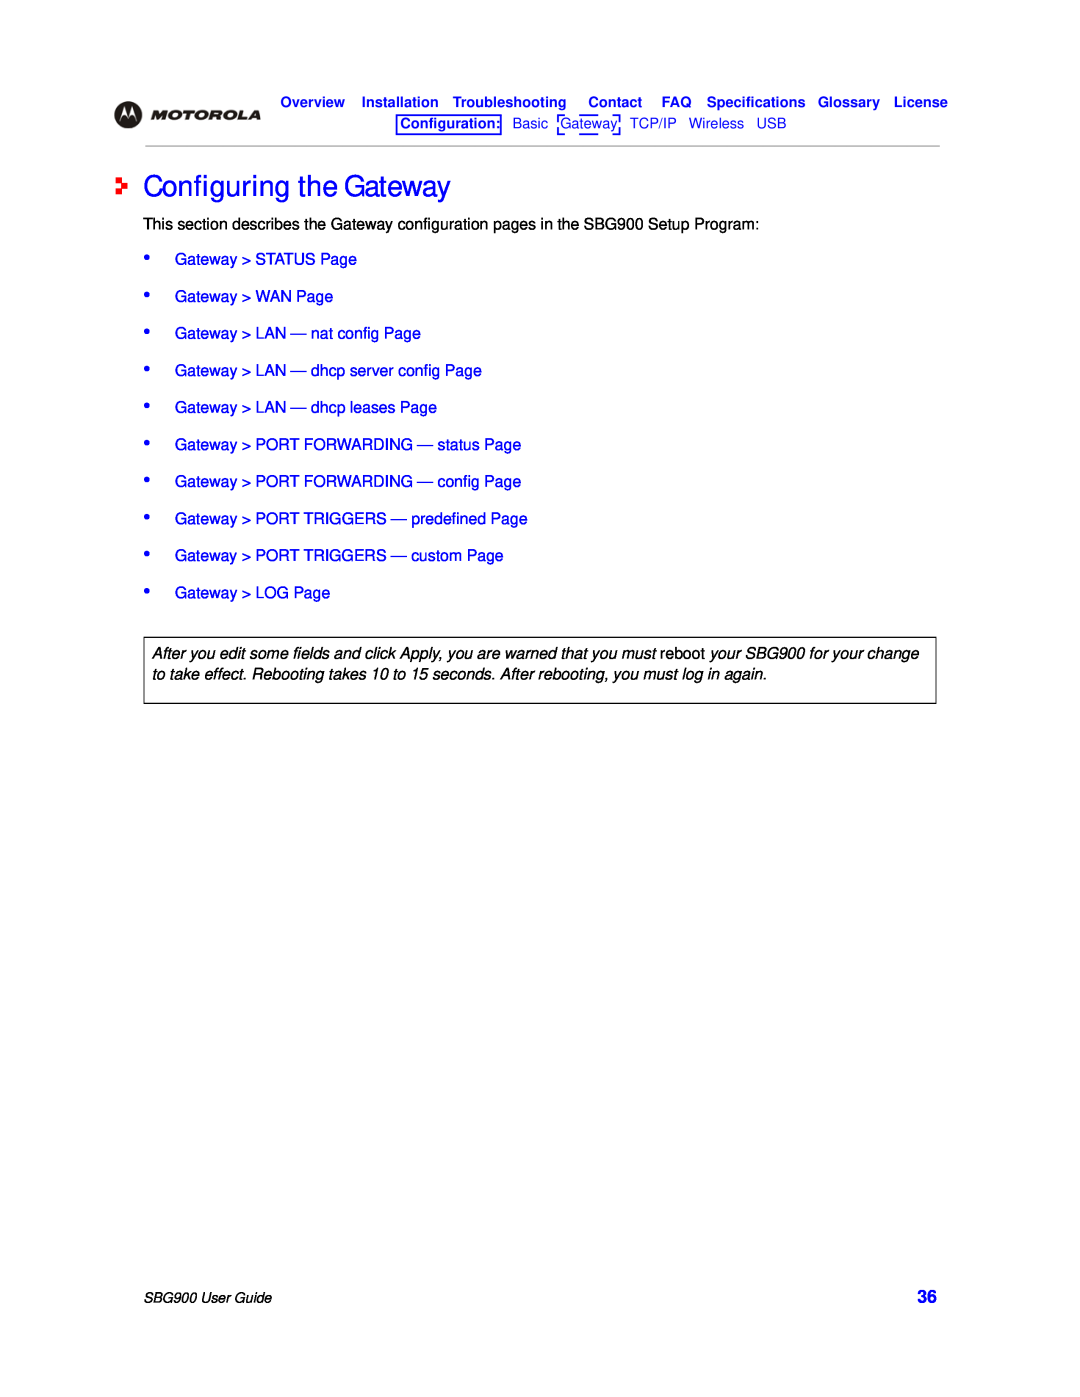 Motorola SBG900 manual Configuring the Gateway, Gateway STATUS Page Gateway WAN Page Gateway LAN - nat config Page 